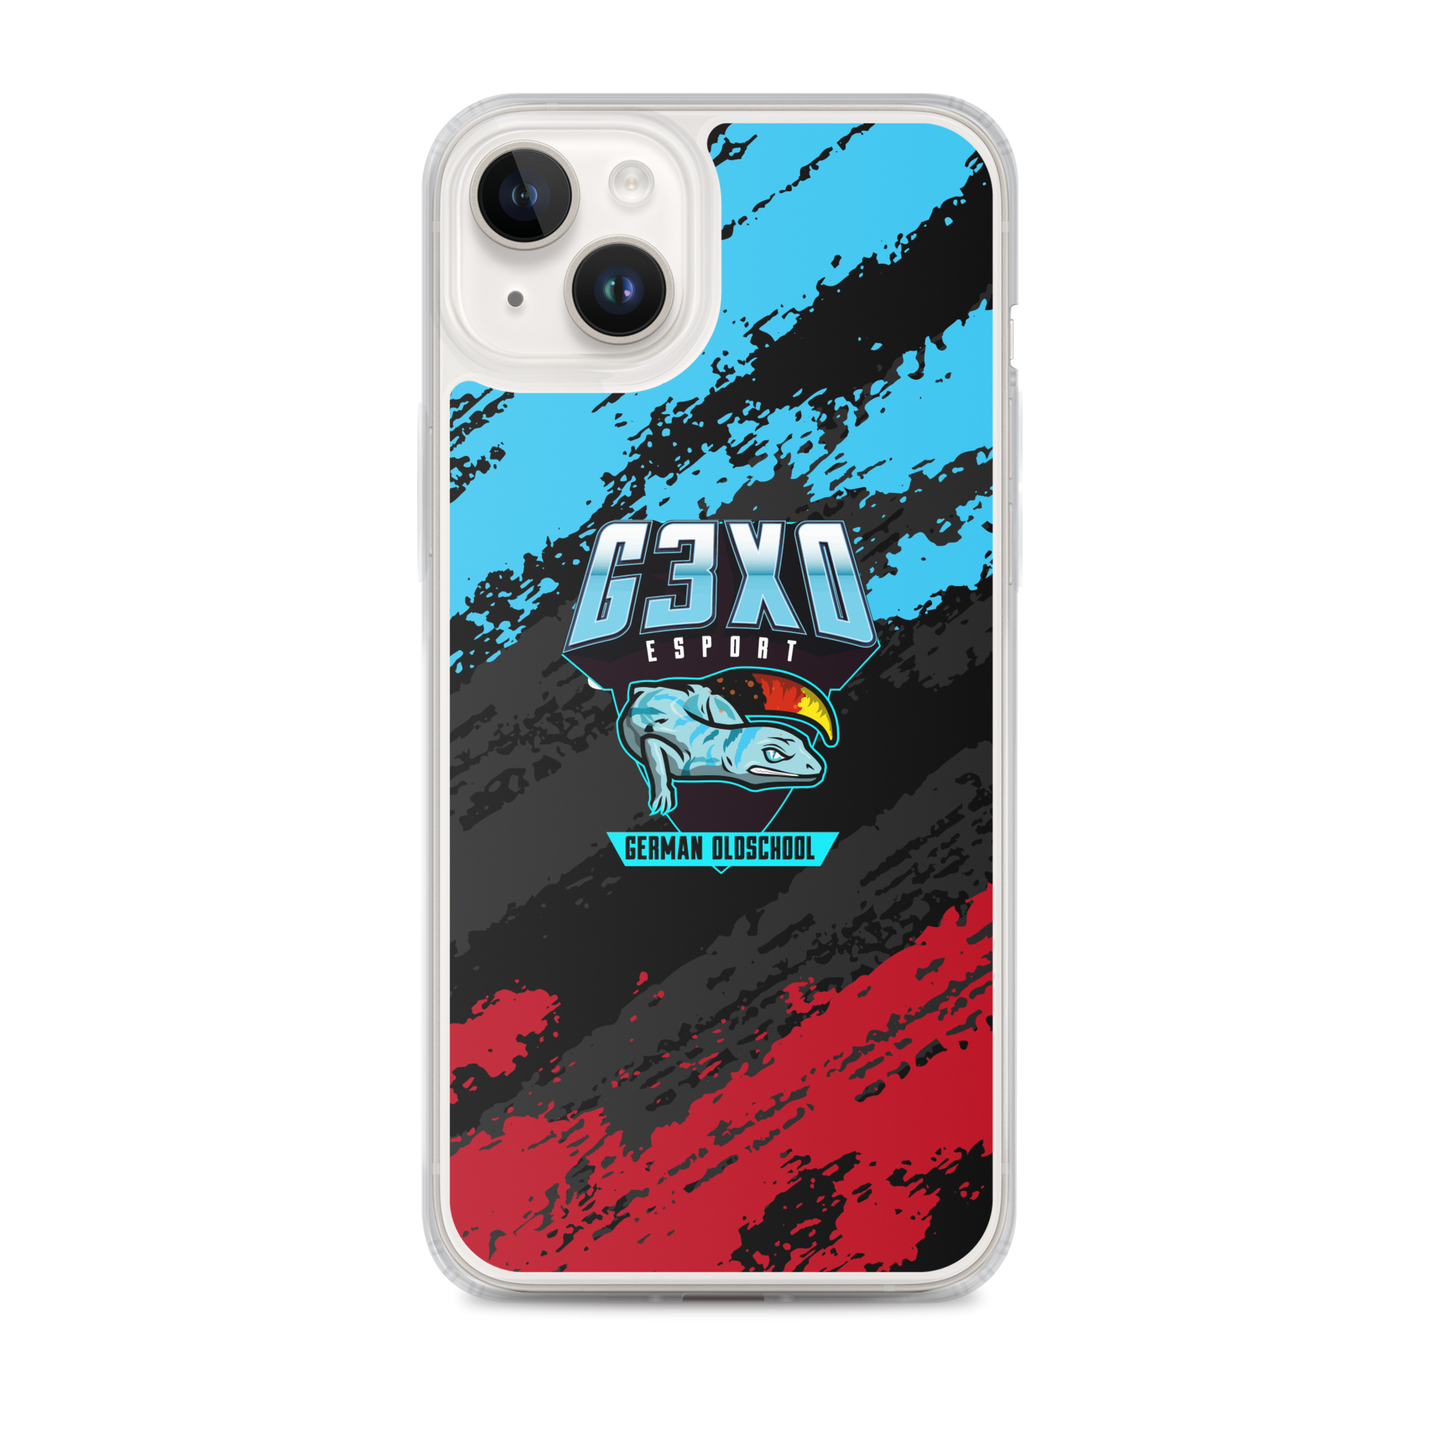 G3XO ESPORT - iPhone® Handyhülle 2022